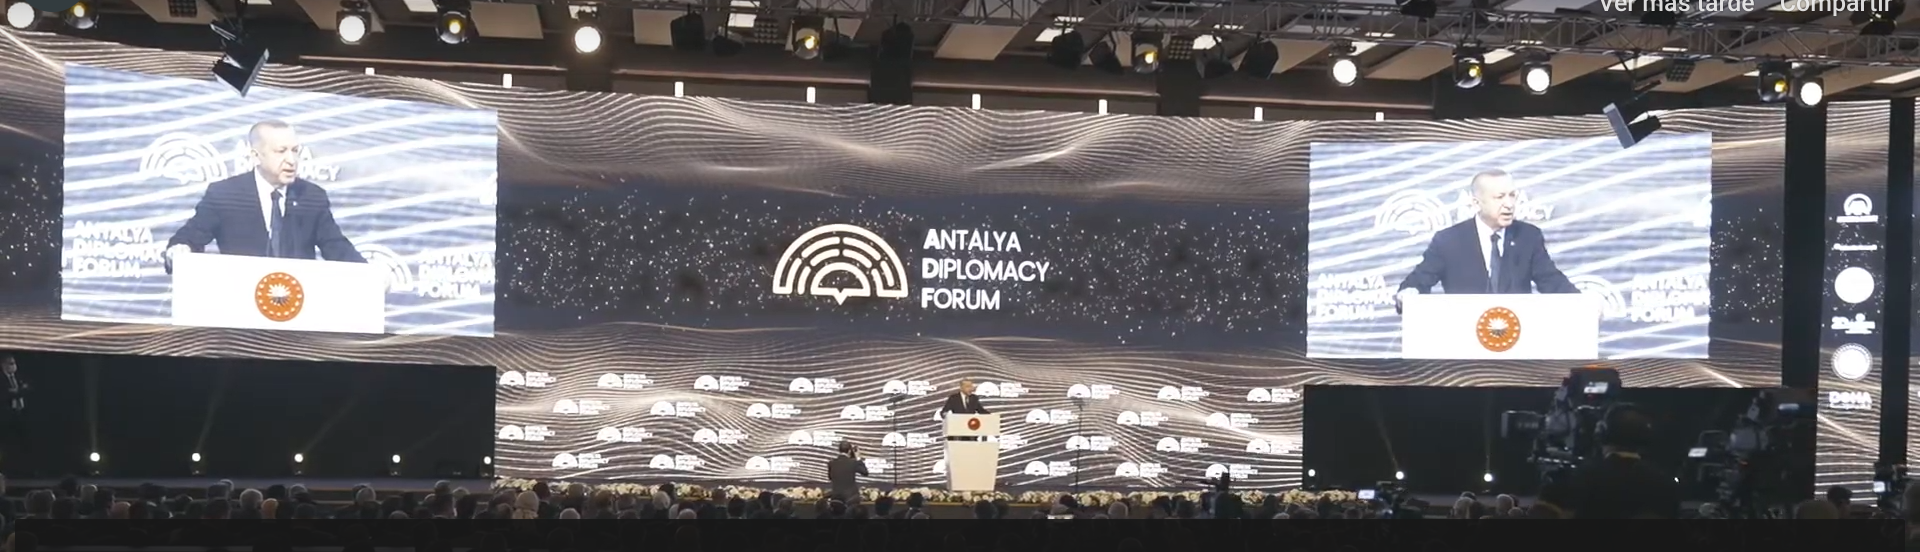 Türkiye: Antalya Diplomacy Forum 2024 Gears Up for Its 3rd Edition